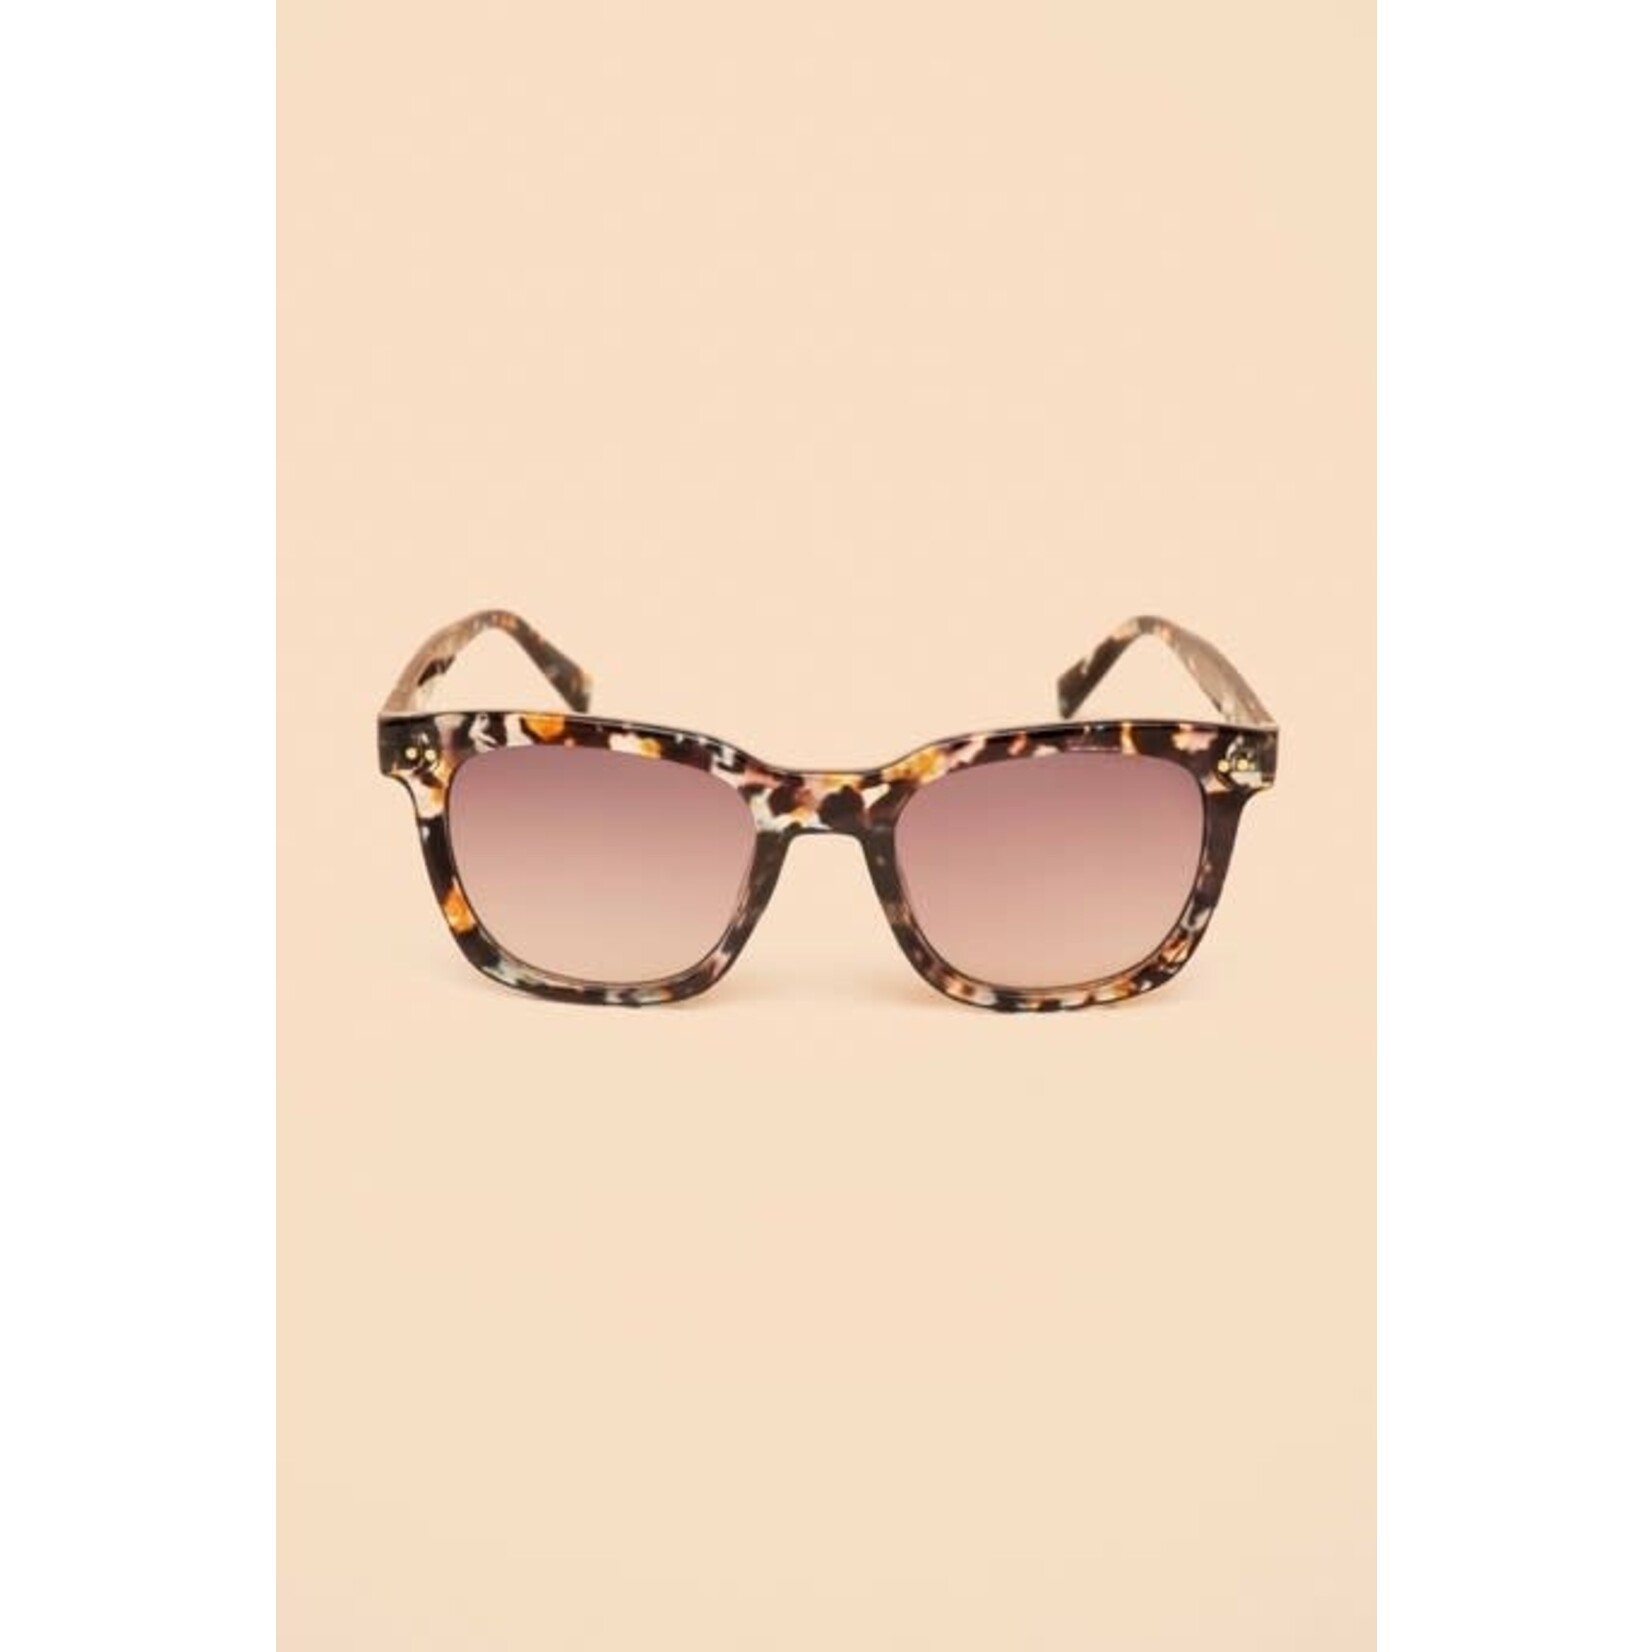 Powder Katana Limited Edition Sunglasses in Mono Tortoiseshell